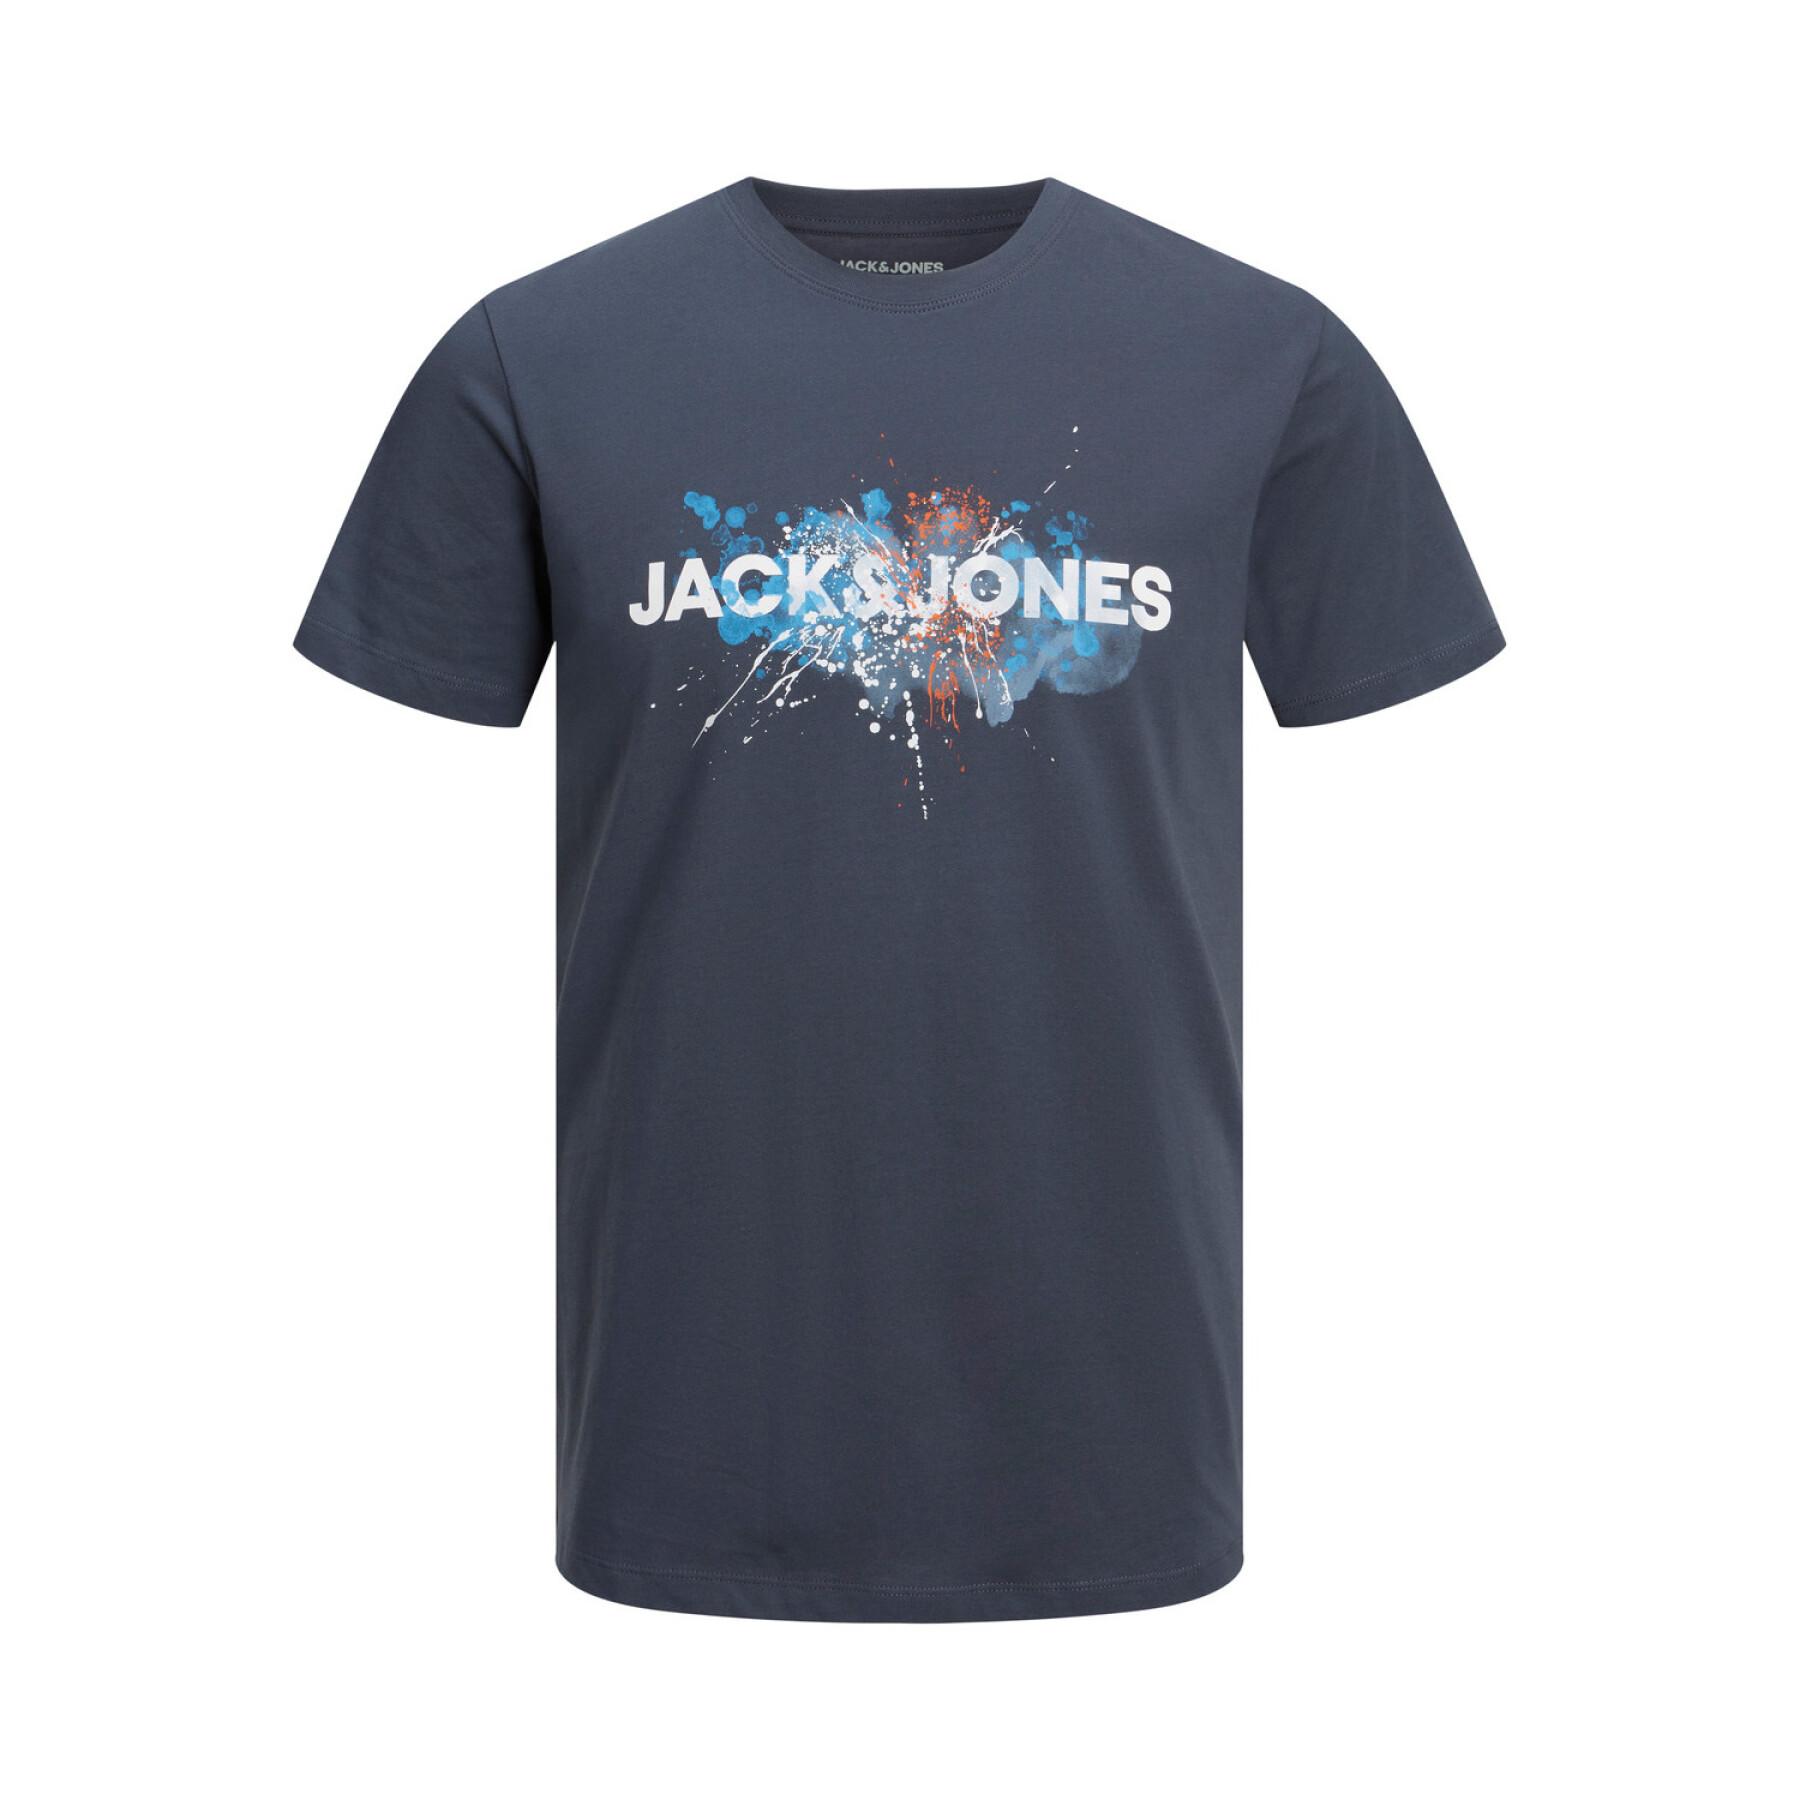 Koszulka Jack & Jones Tear